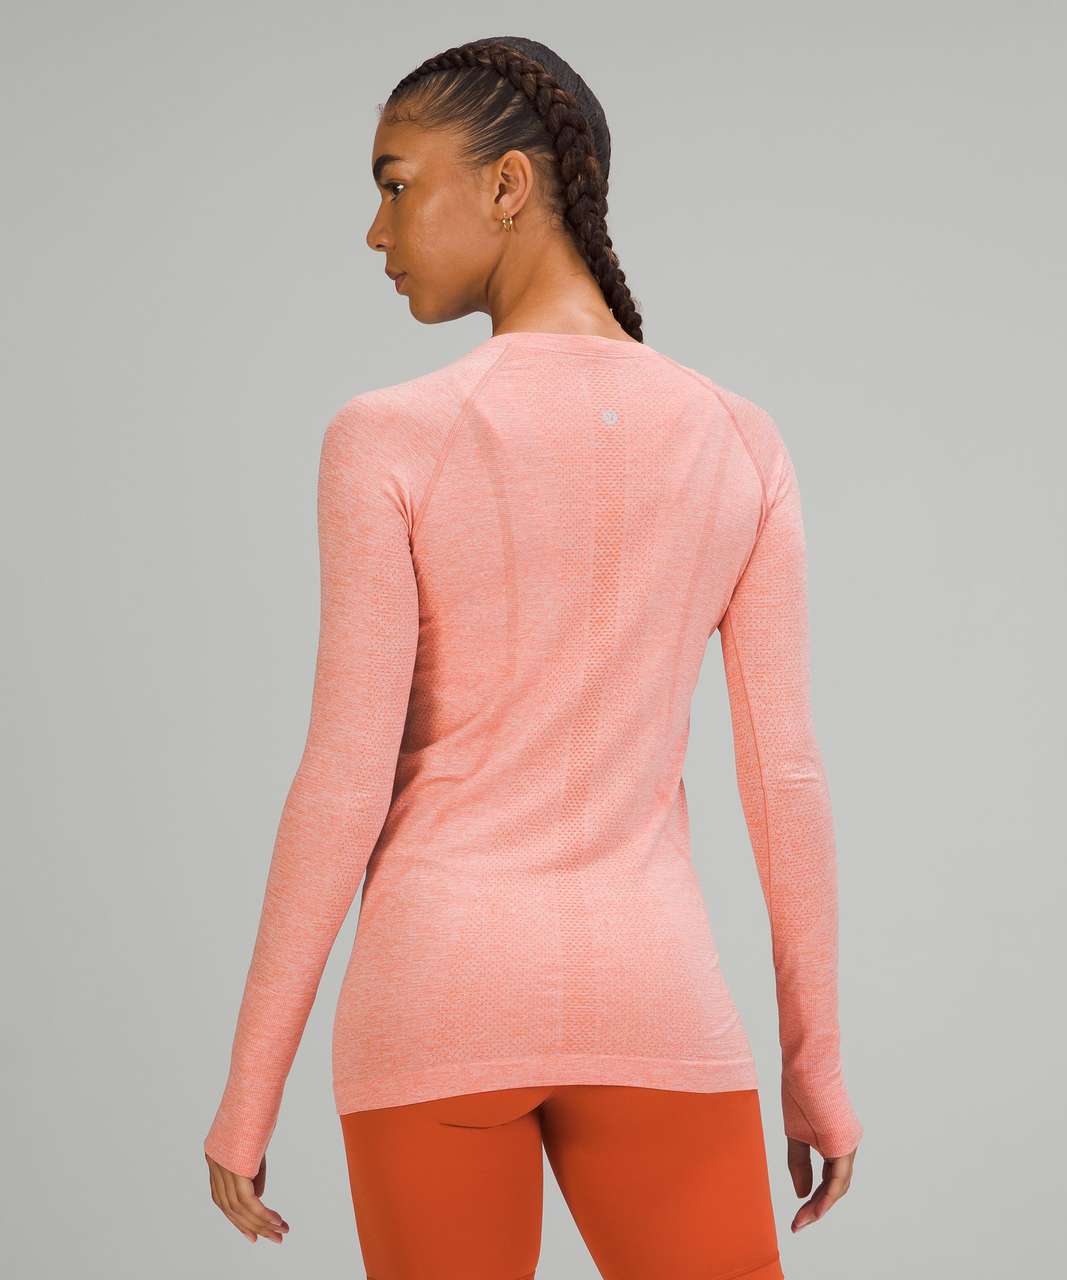 Lululemon Swiftly Tech Long Sleeve Shirt 2.0 - Pink Savannah